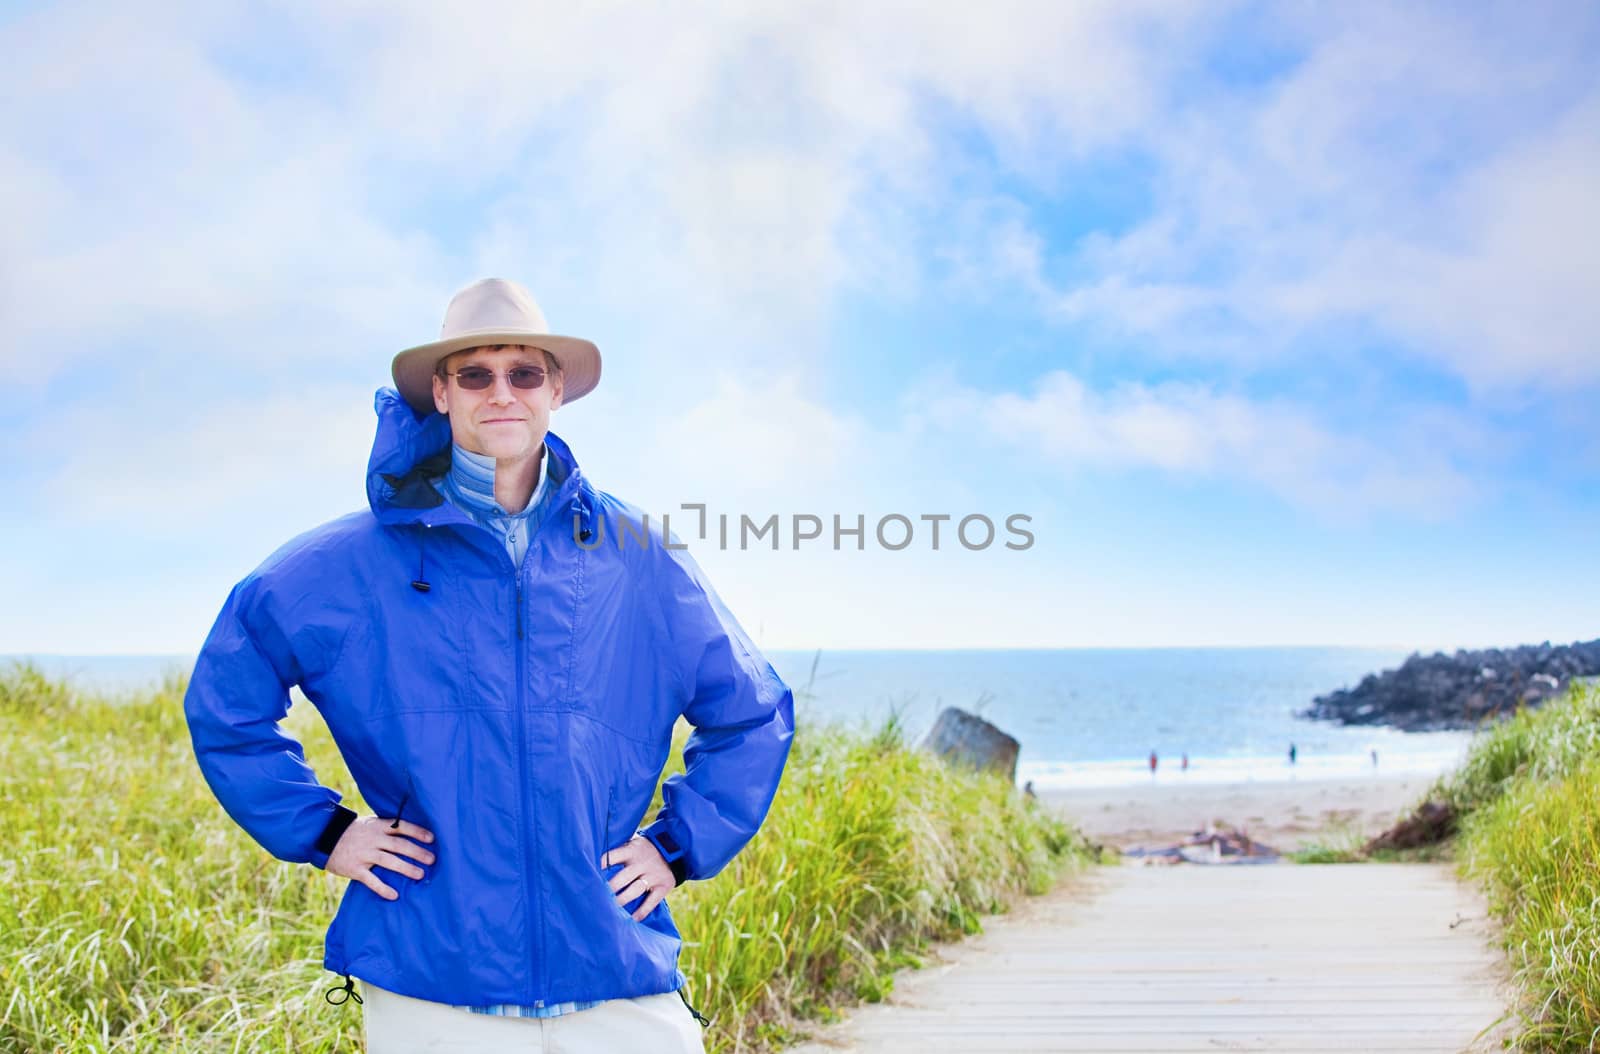 Caucasian man in forties wearing rain jacket by ocean shore by jarenwicklund